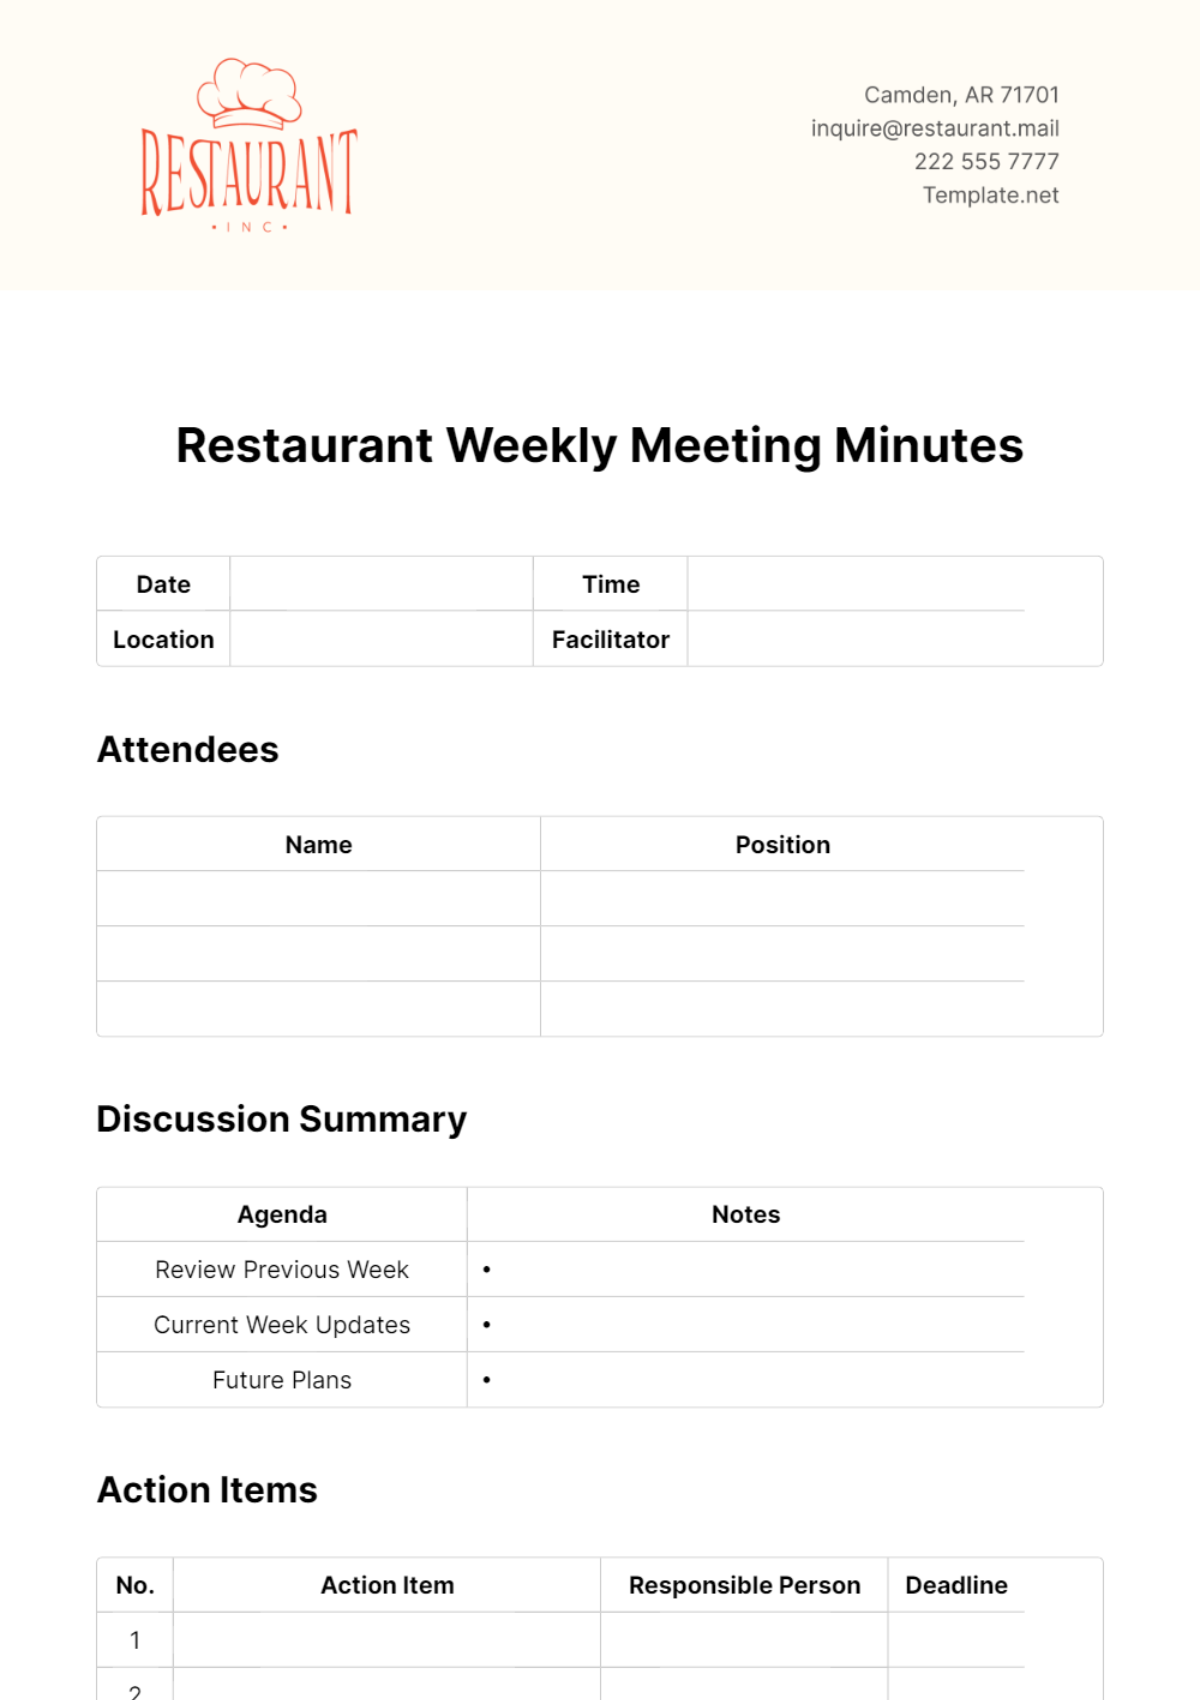 Restaurant Weekly Meeting Minutes Template